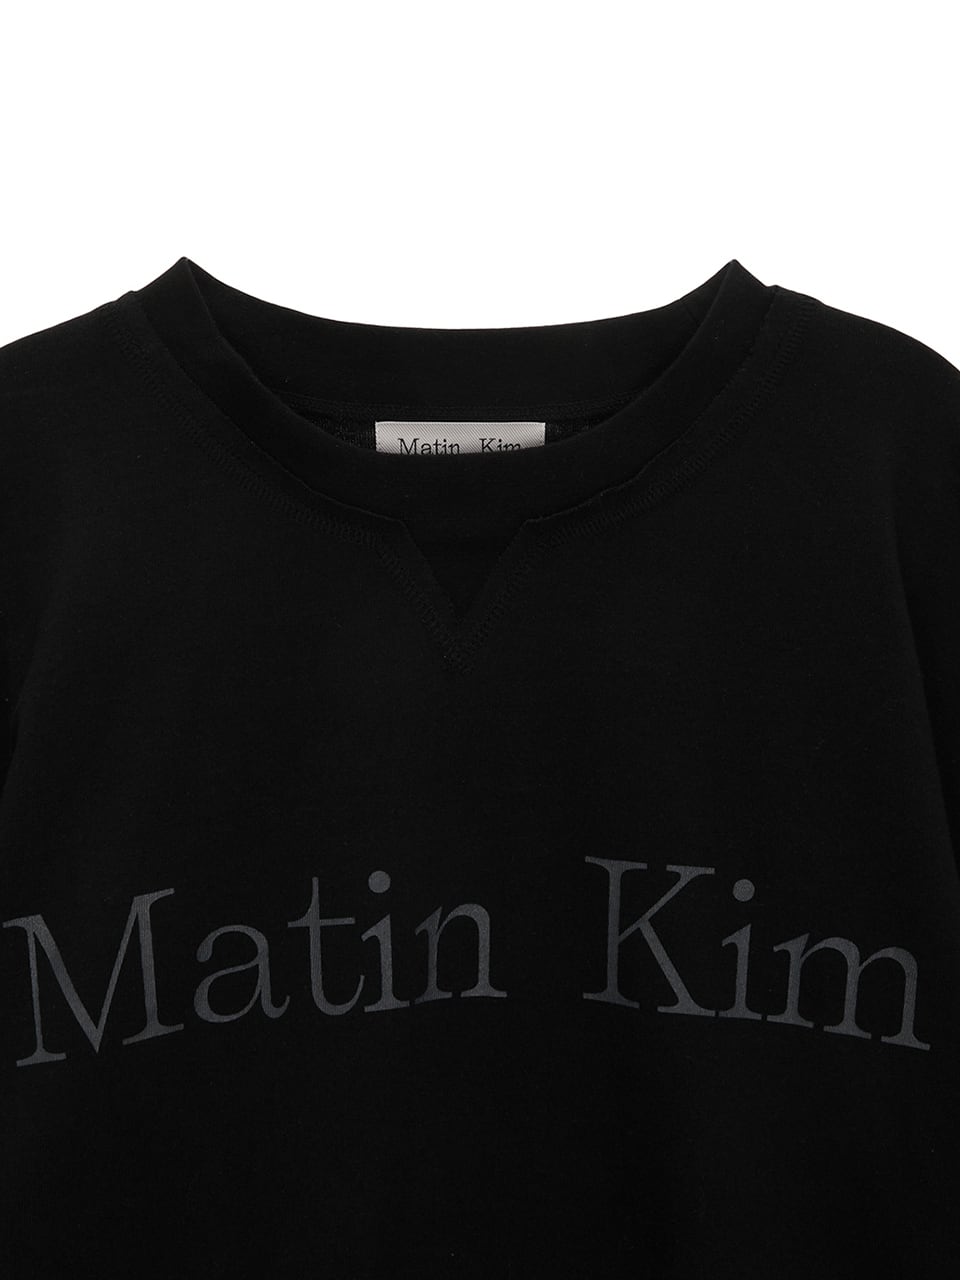 Matin Kim] MATIN TYPO LONG SLEEVE TOP IN BLACK 正規品 韓国ブランド